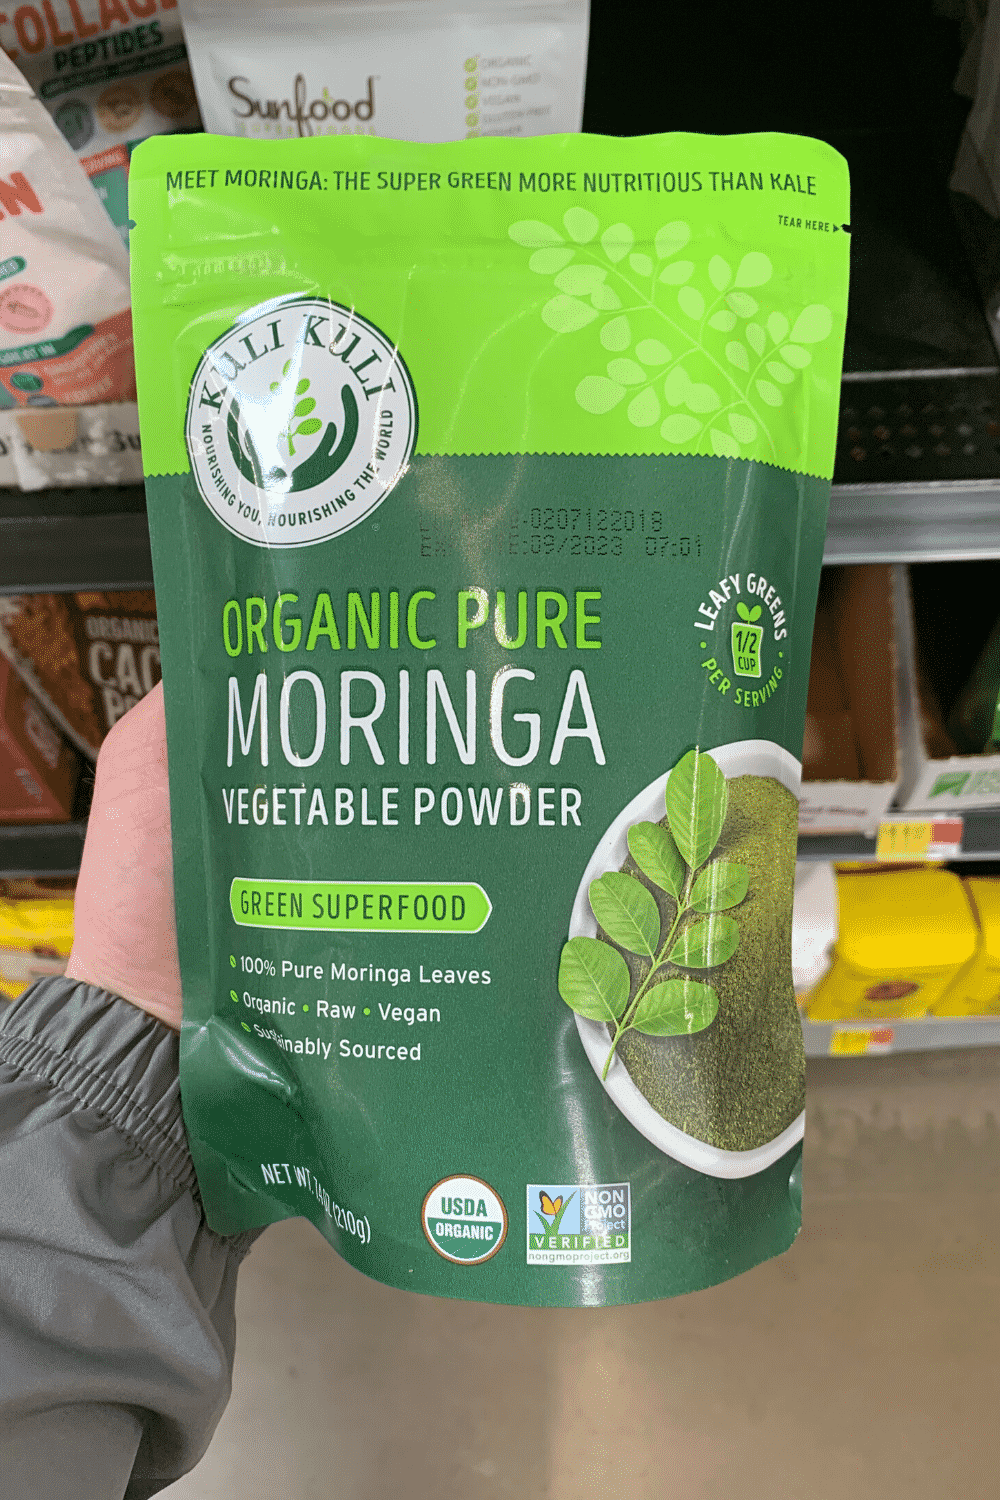 A hand holding organic pure moringa vegetable powder green super food.